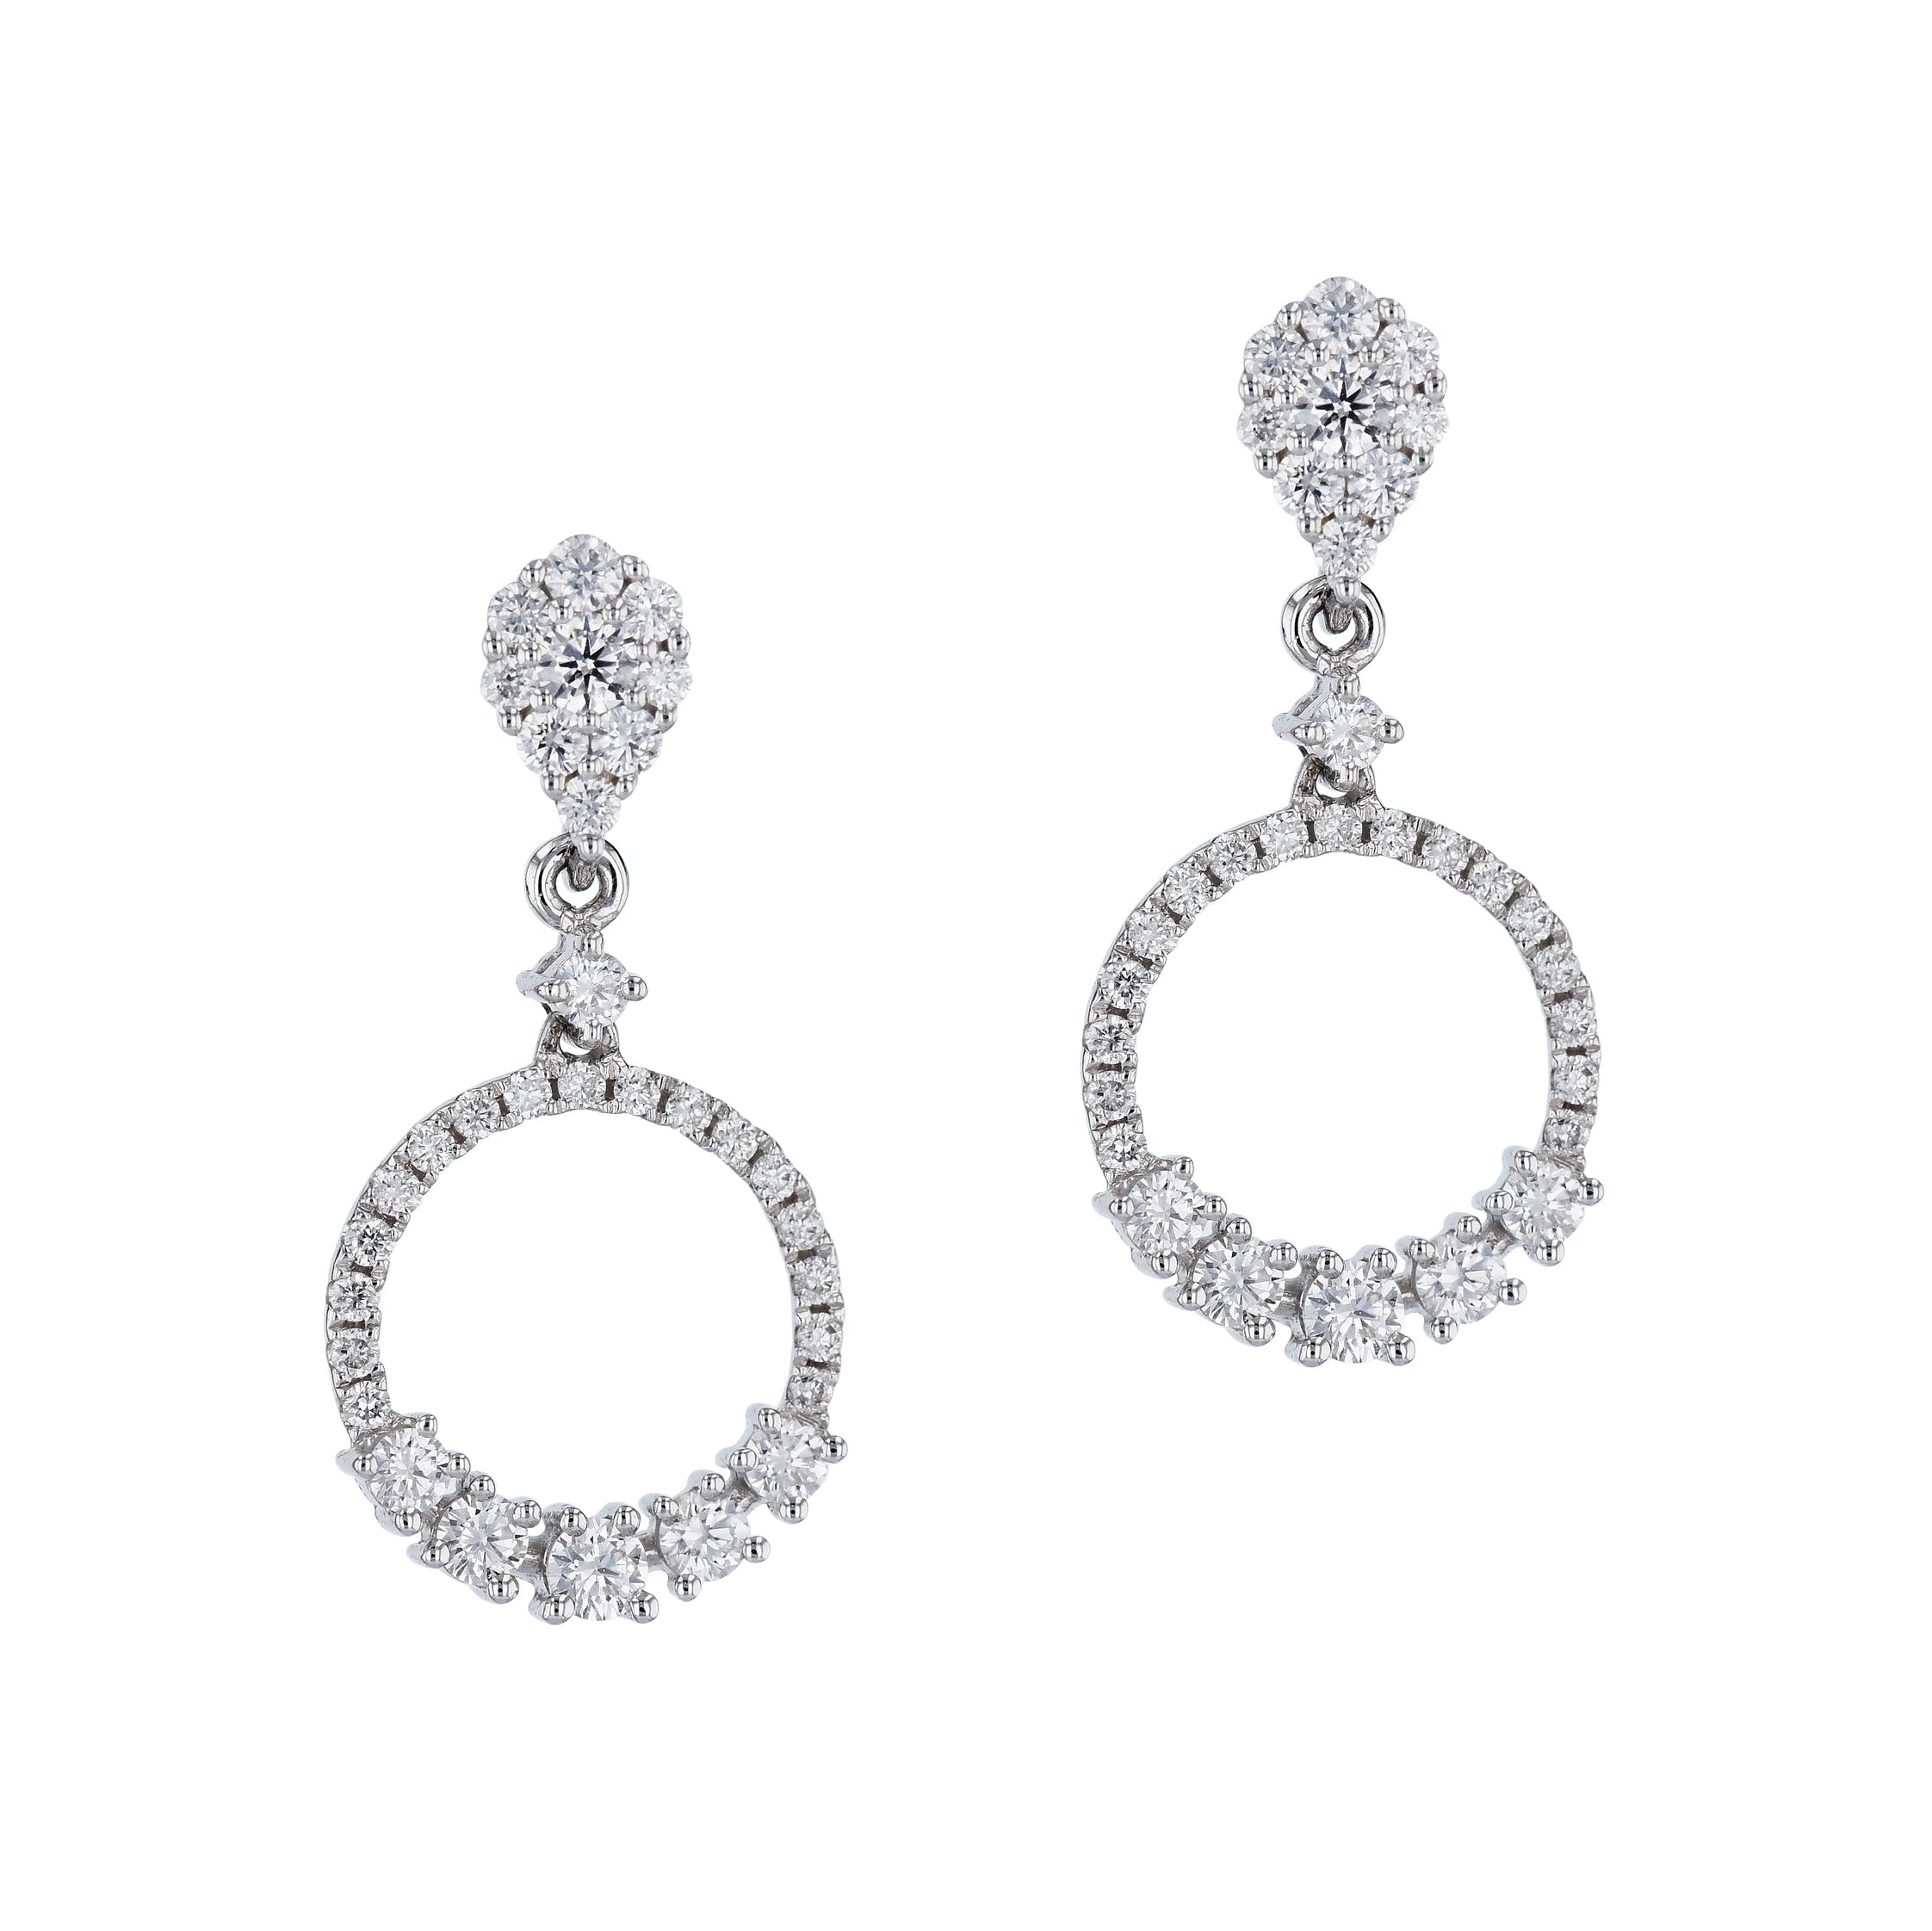 18kt White Gold Diamond Drop Earrings Earrings Curated by H